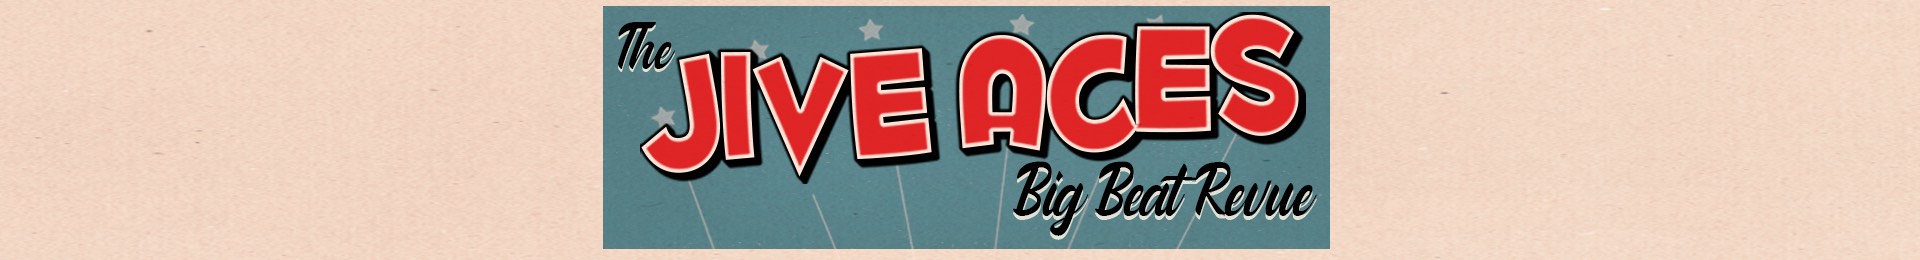 The Jive Aces Big Beat Revue banner image